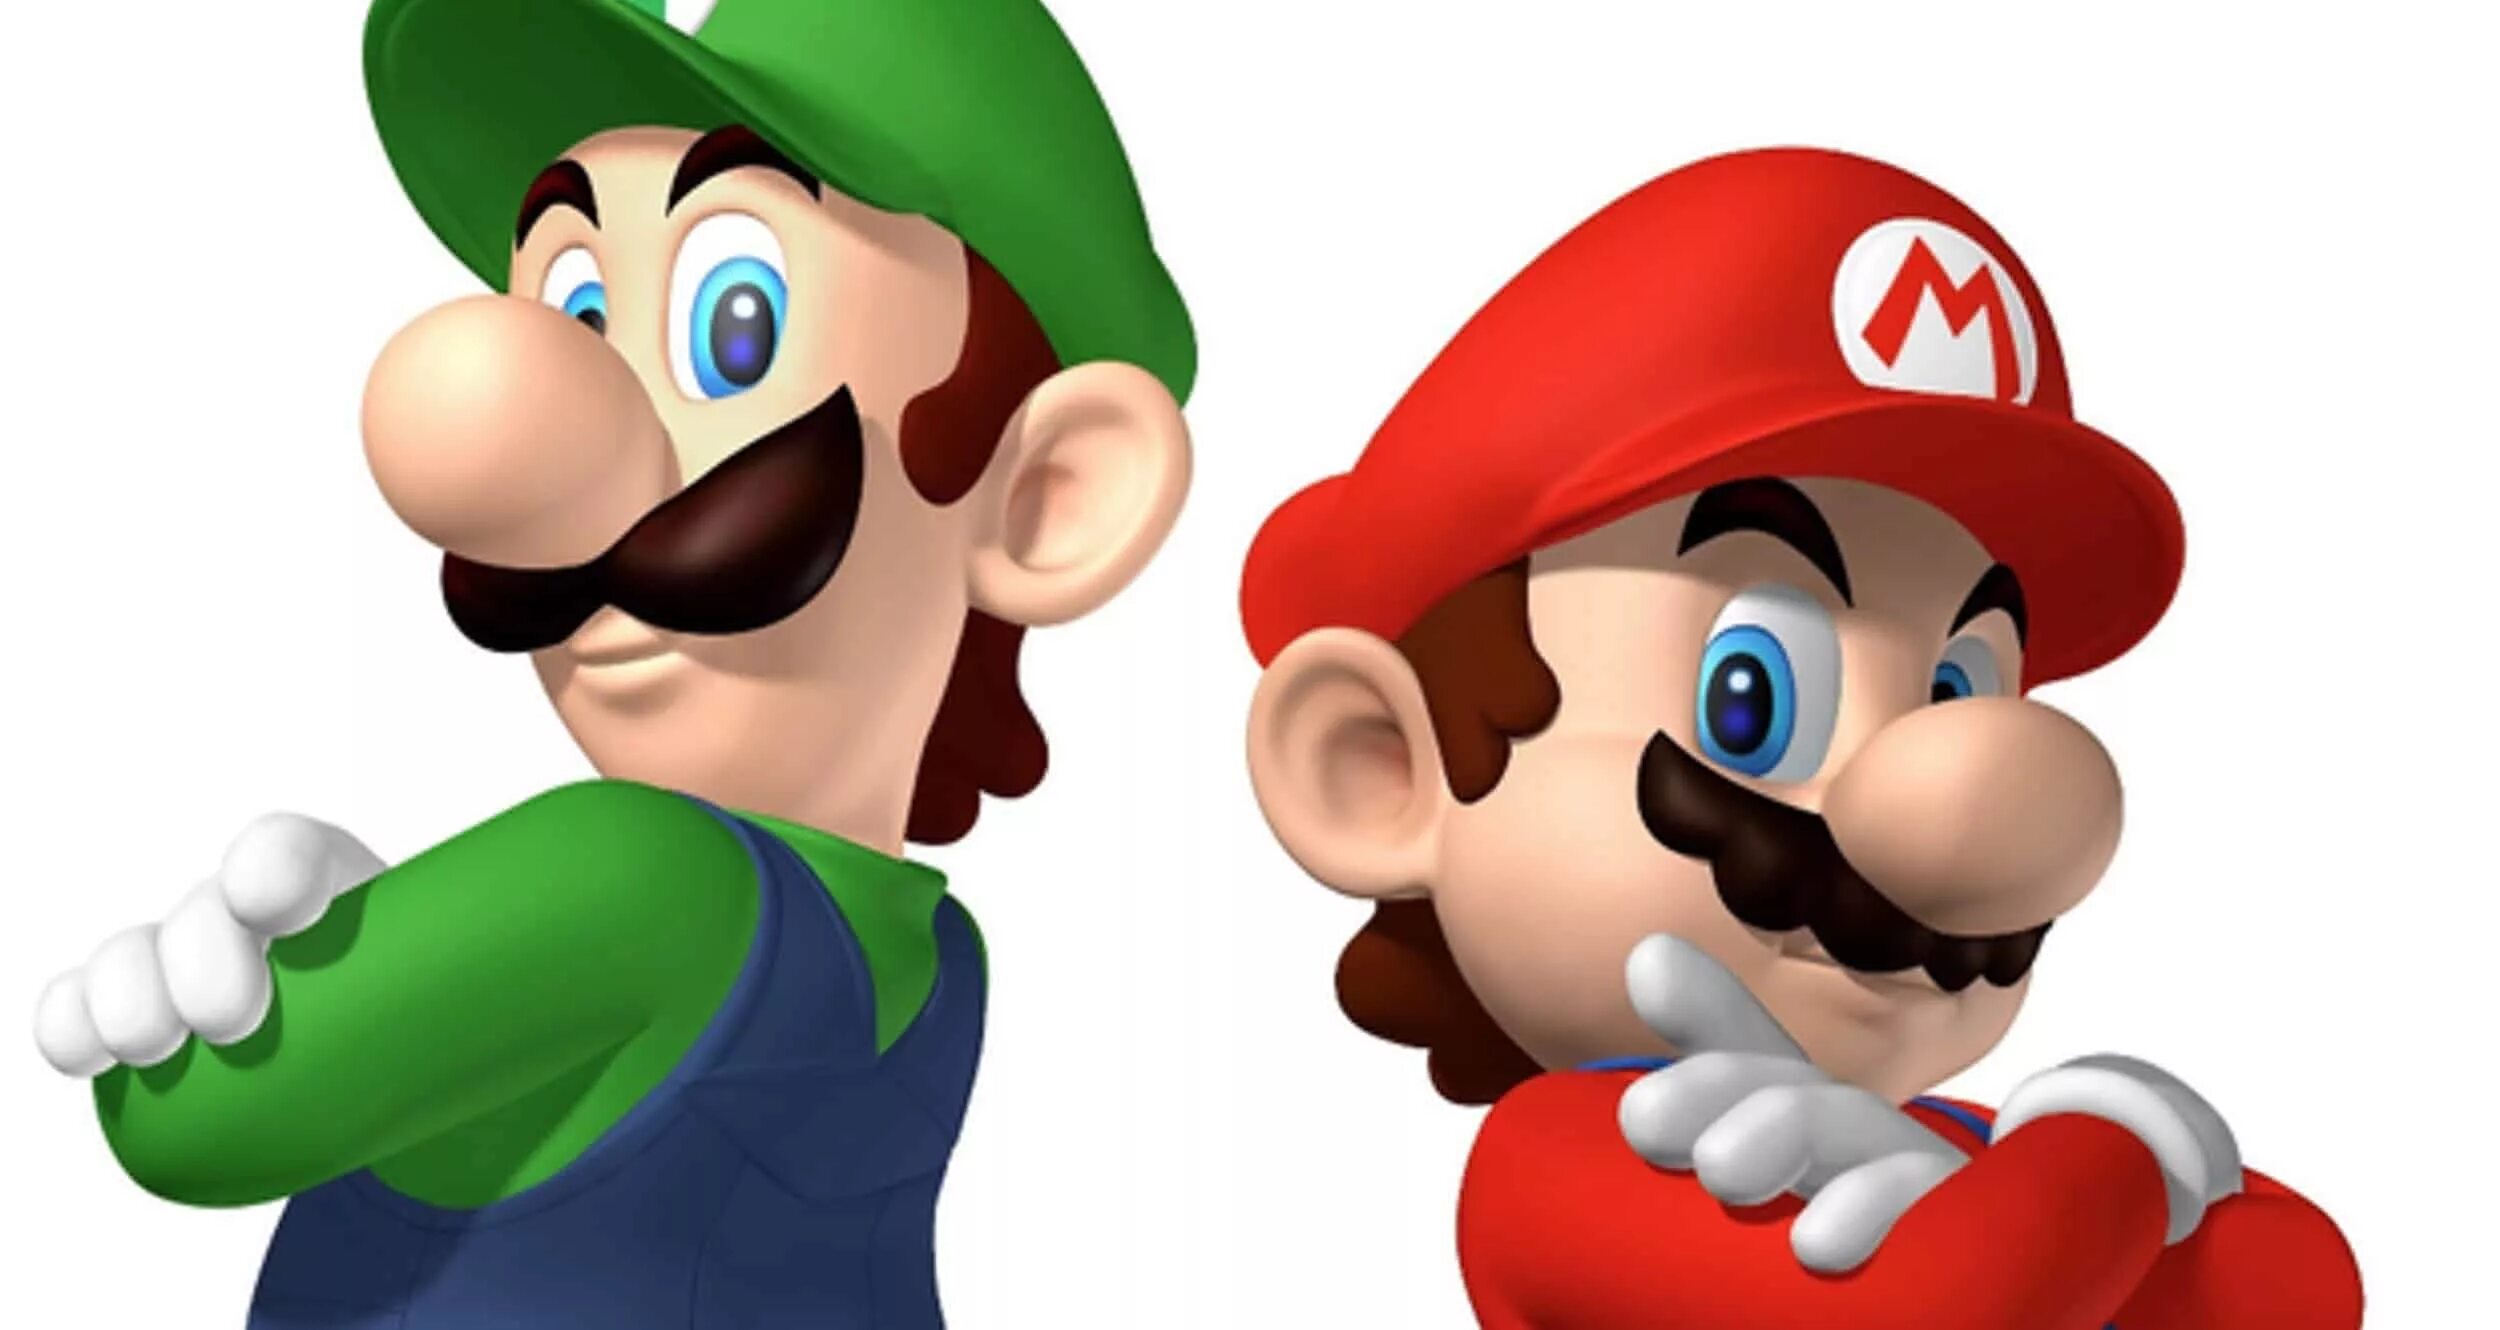 Mario bros 5. Марио 1983. Супер Марио и Луиджи. Луиджи БРОС. Супер братья Марио Луиджи.